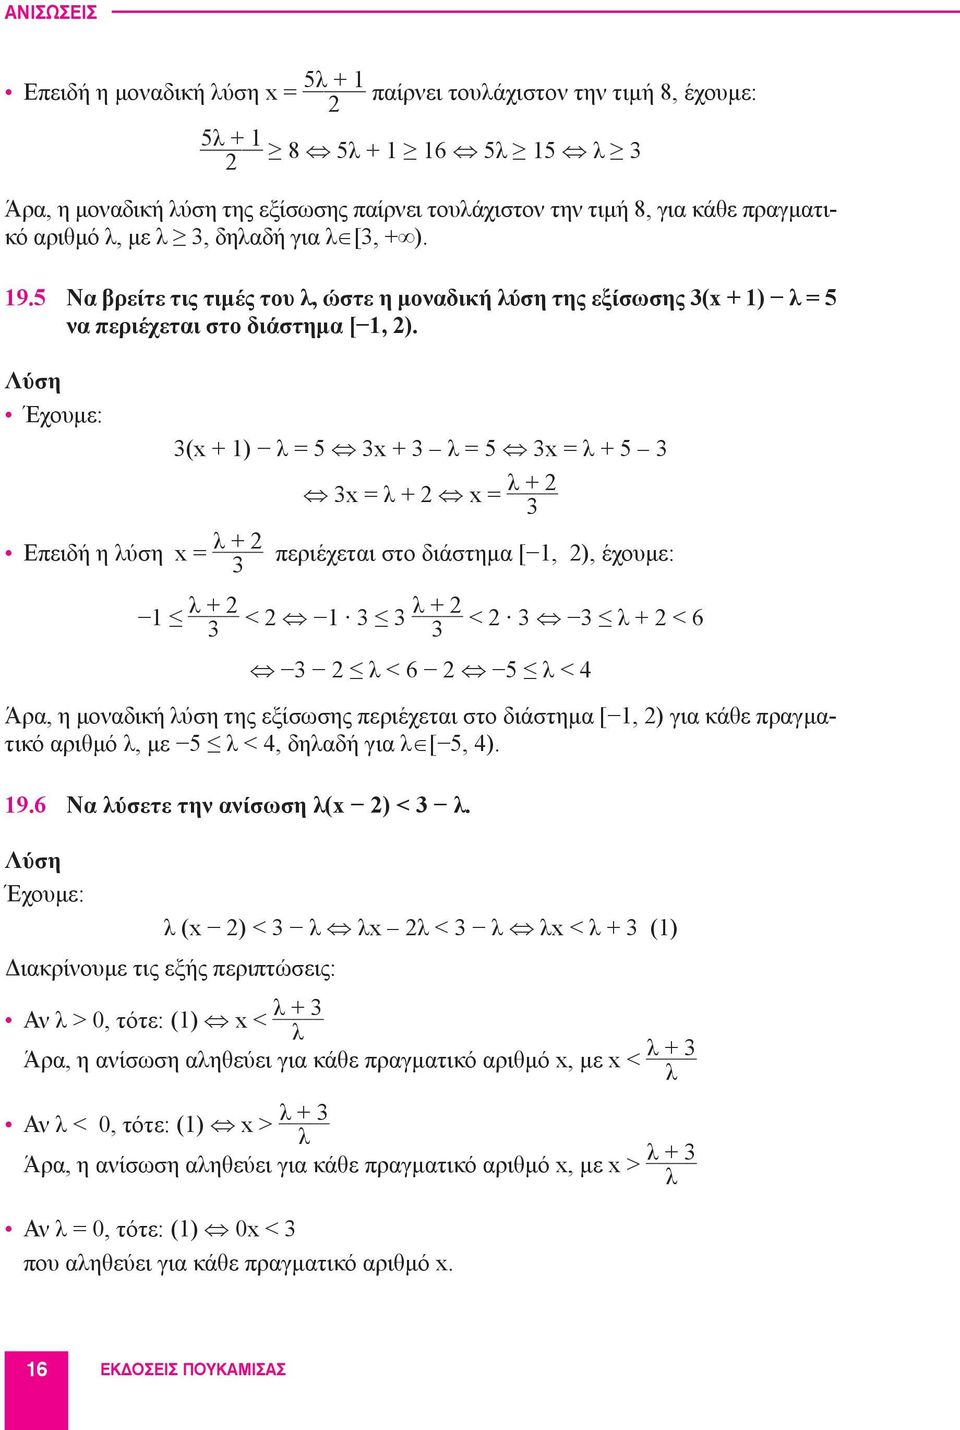 ύση Έχουμε: (x + 1) λ = 5 x + λ = 5 x = λ + 5 x = λ + 2 x = λ + 2 λ + 2 Επειδή η λύση x = περιέχεται στο διάστημα [ 1, 2), έχουμε: 1 λ + 2 < 2 1 λ + 2 < 2 λ + 2 < 6 2 λ < 6 2 5 λ < 4 Άρα, η μοναδική